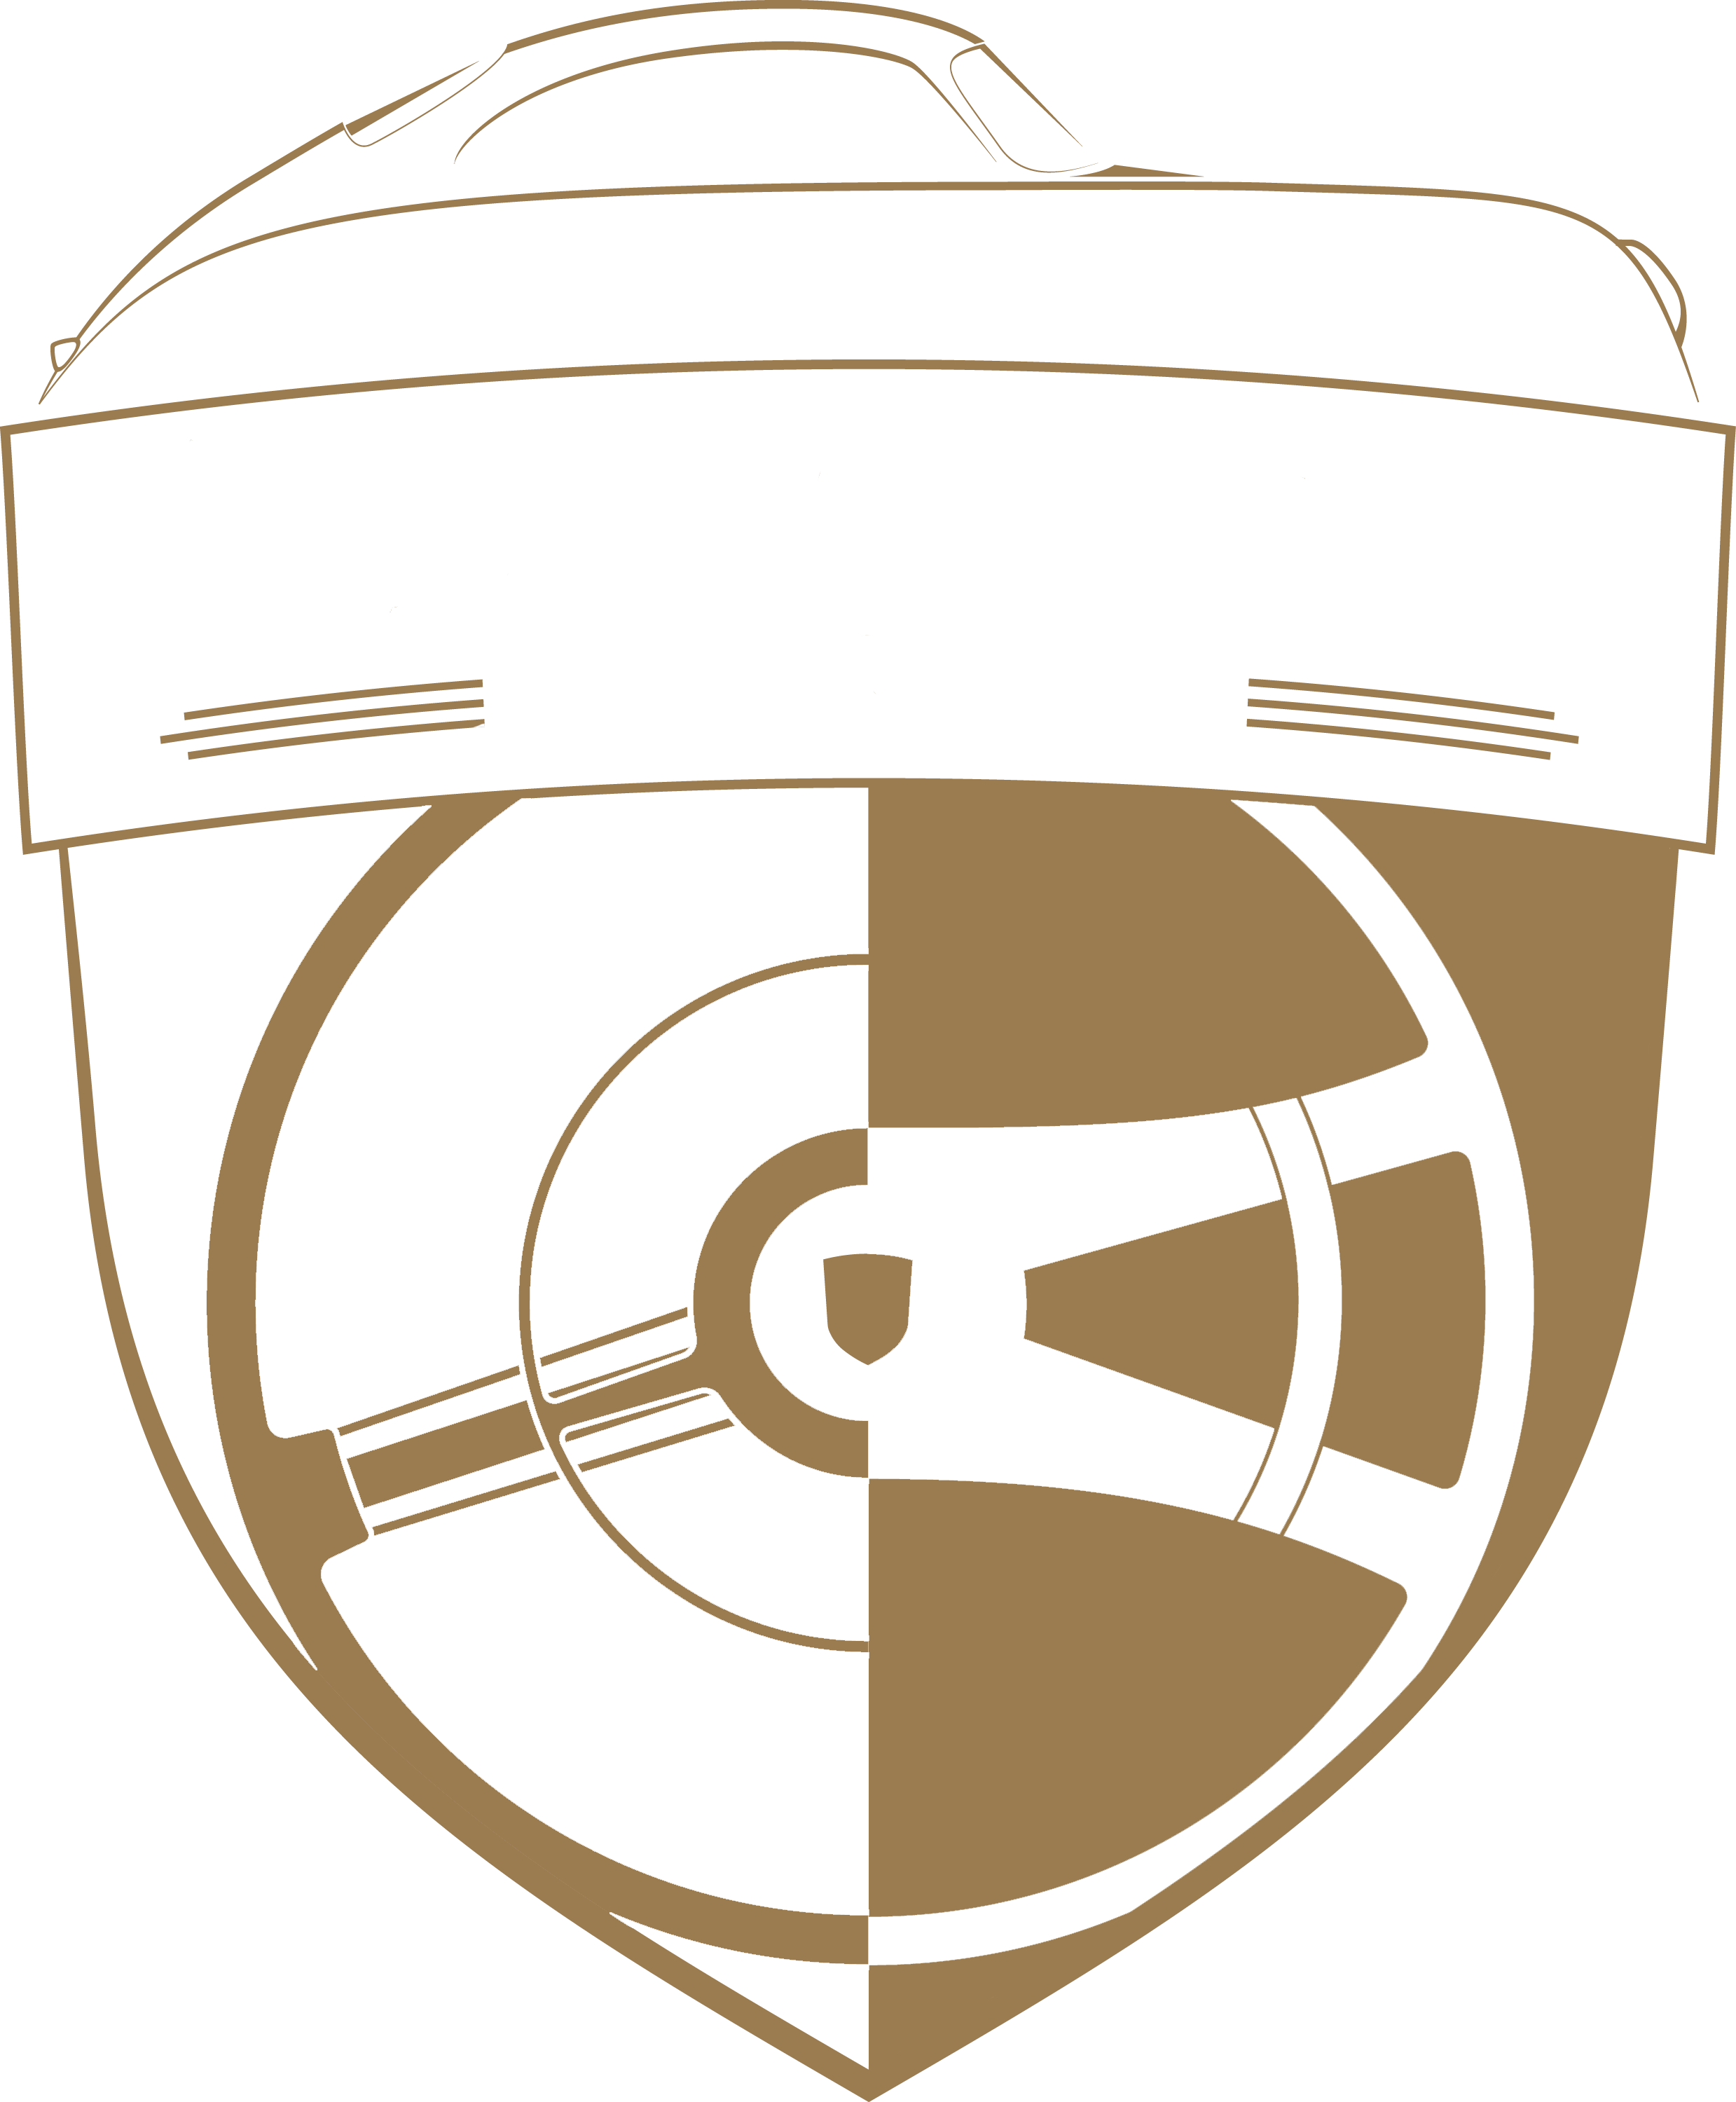 Ande Votteler GmbH Logo